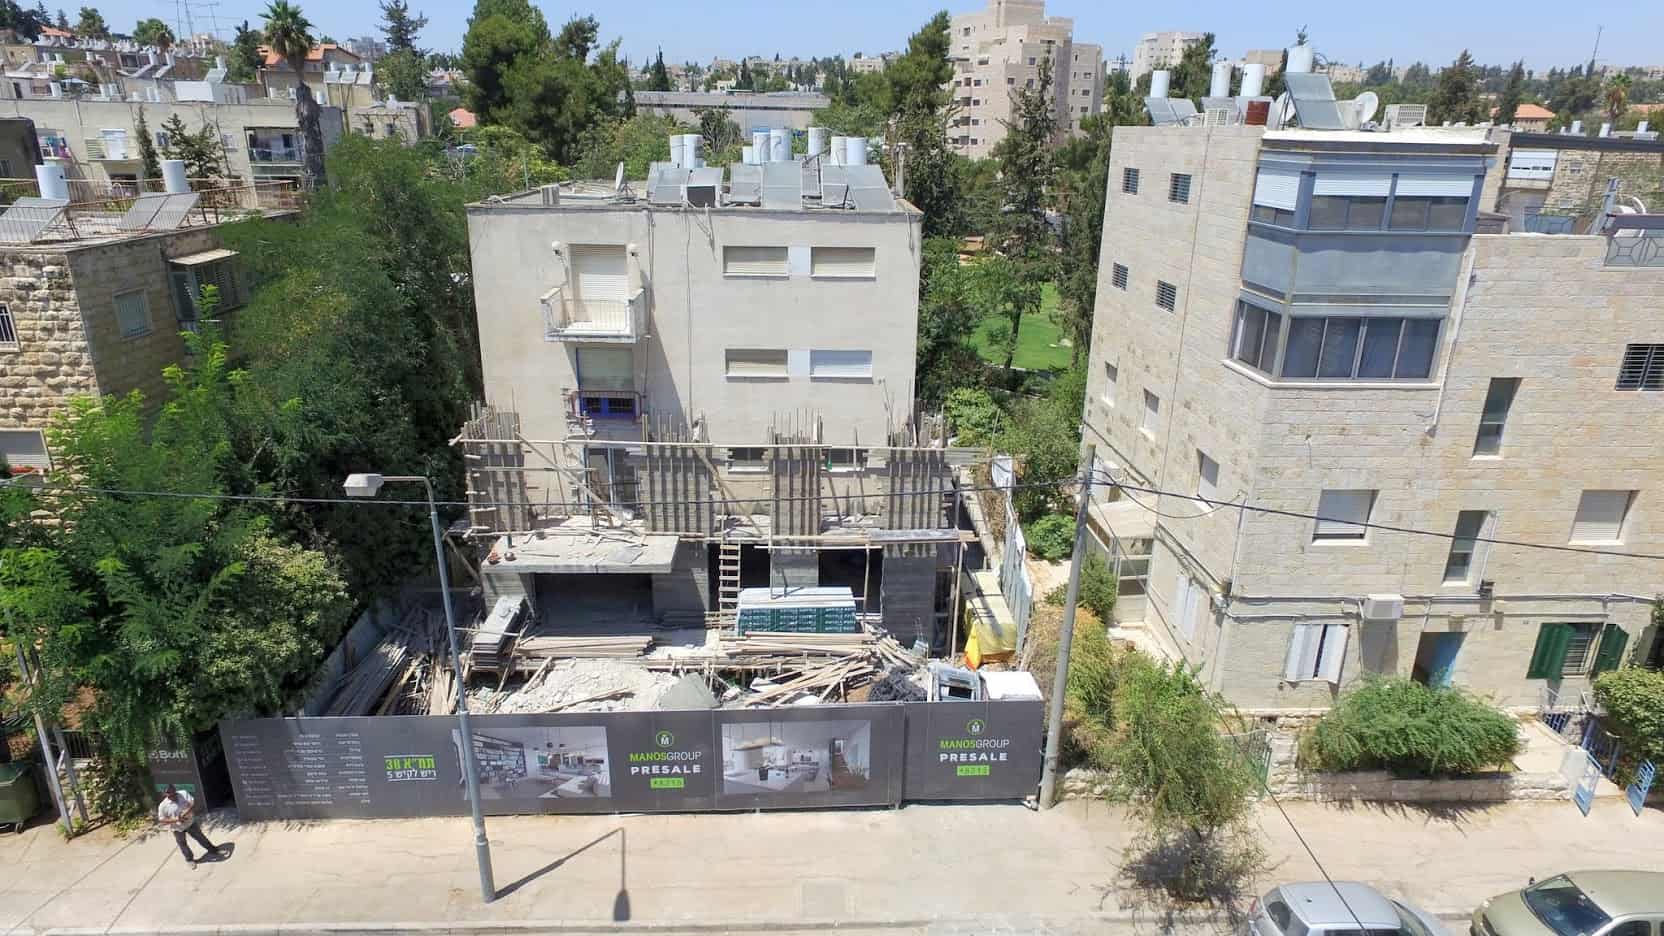 Reish Lakish 5, Jerusalem, Jerusalem – Before implementation of Tama 38 project